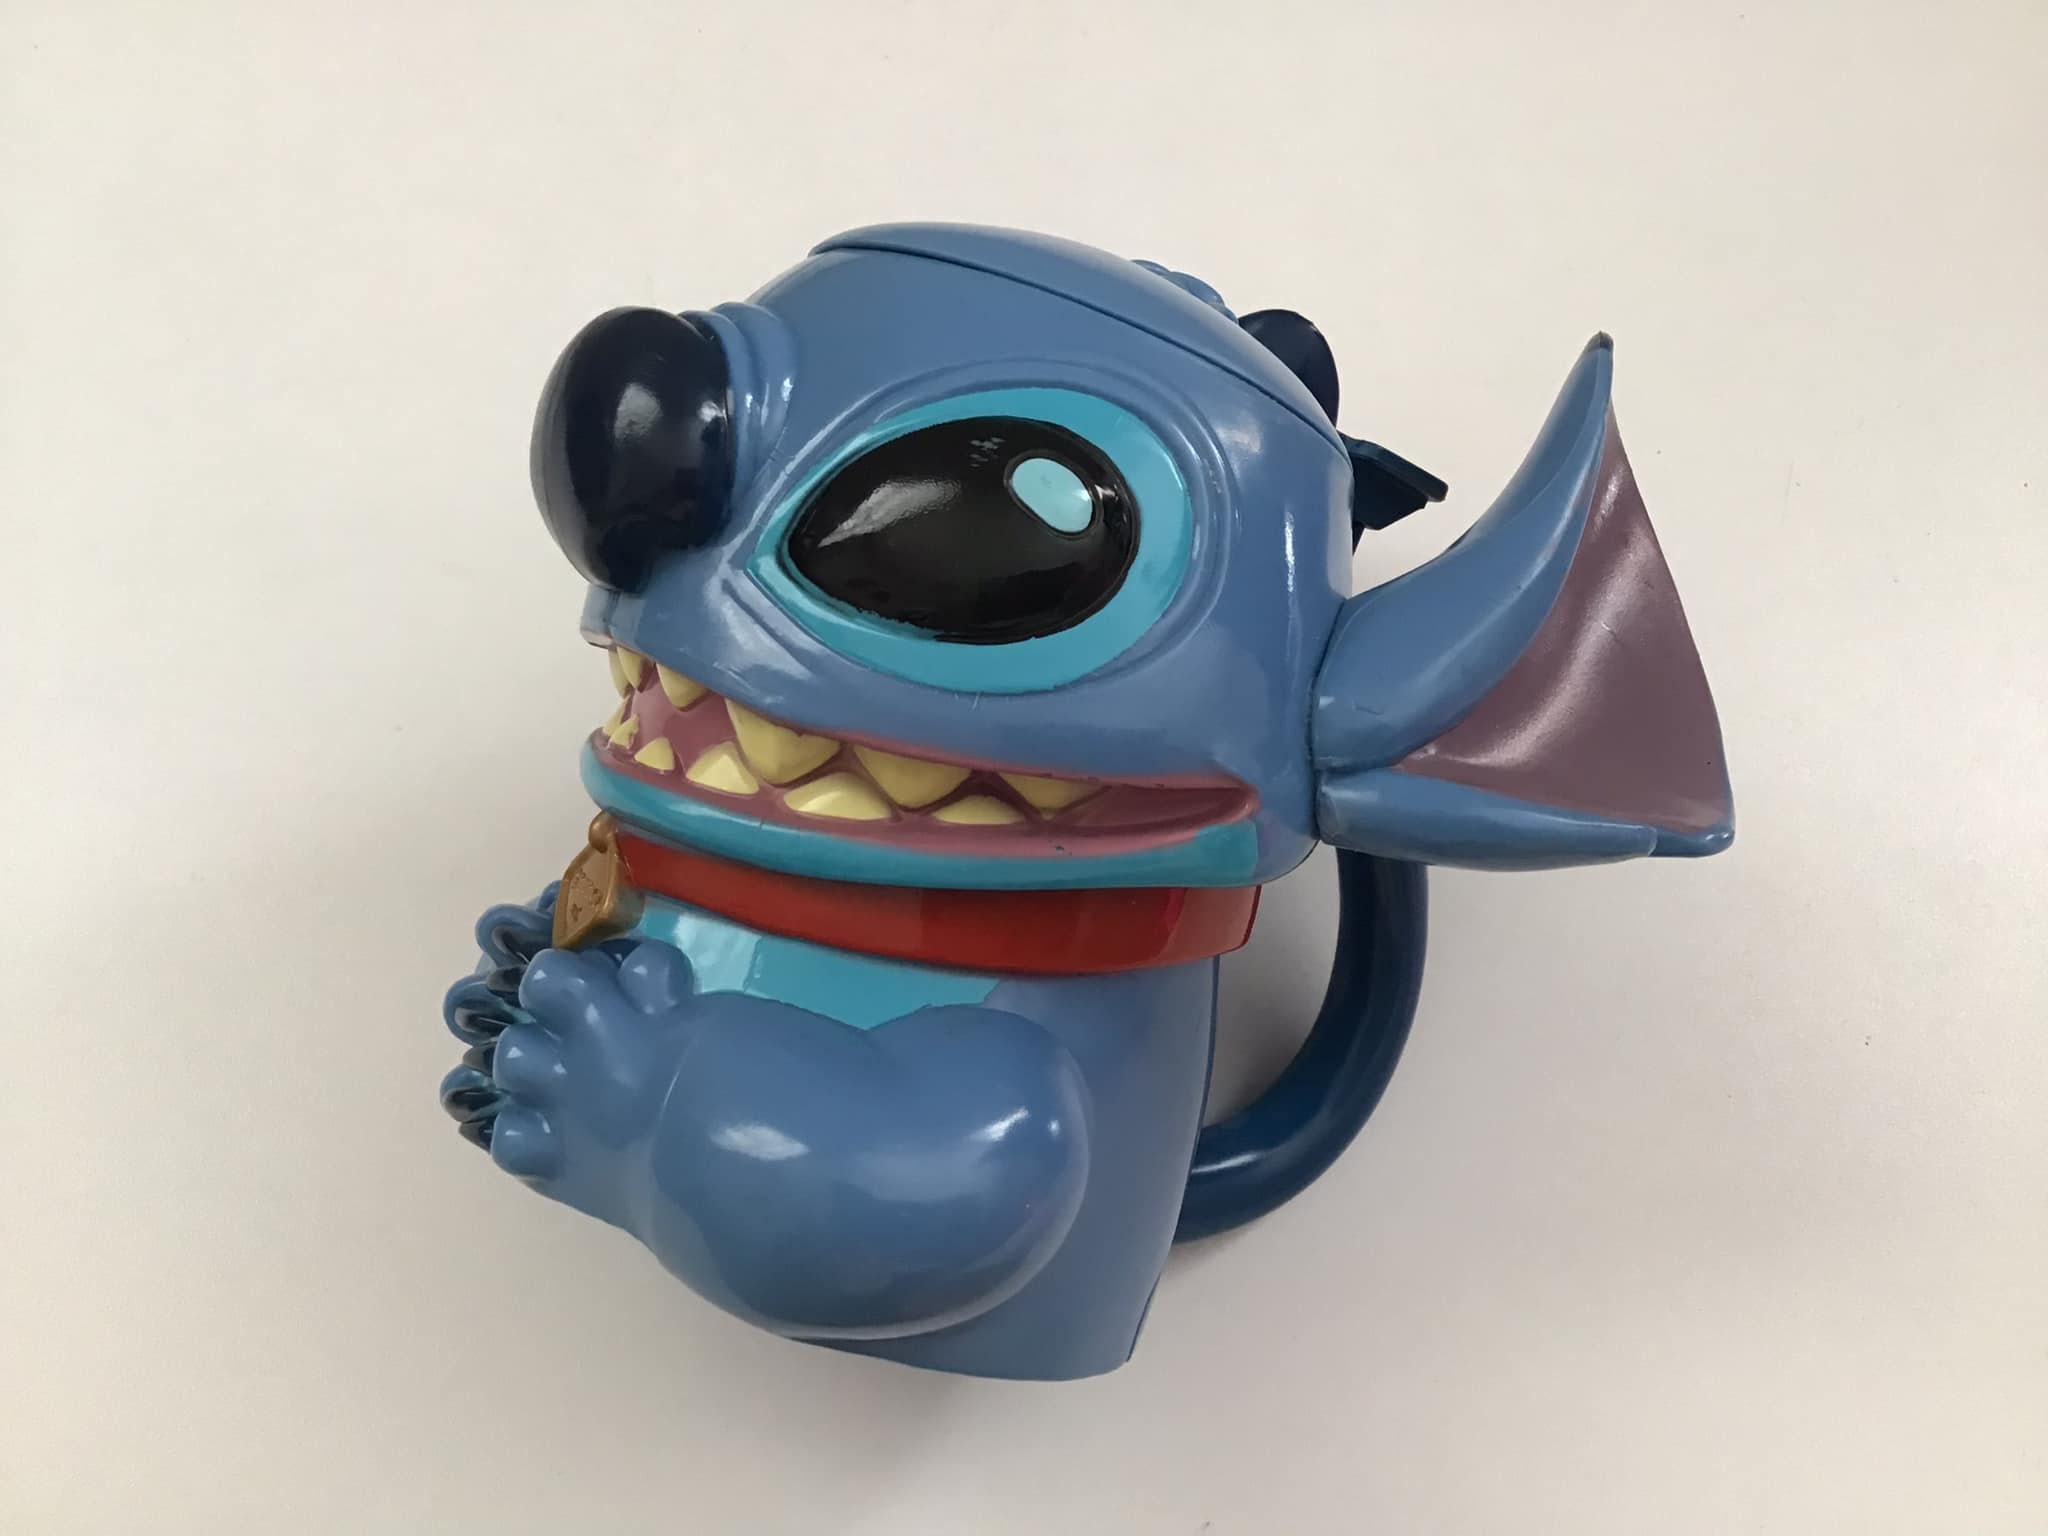 Disney Stitch Mug